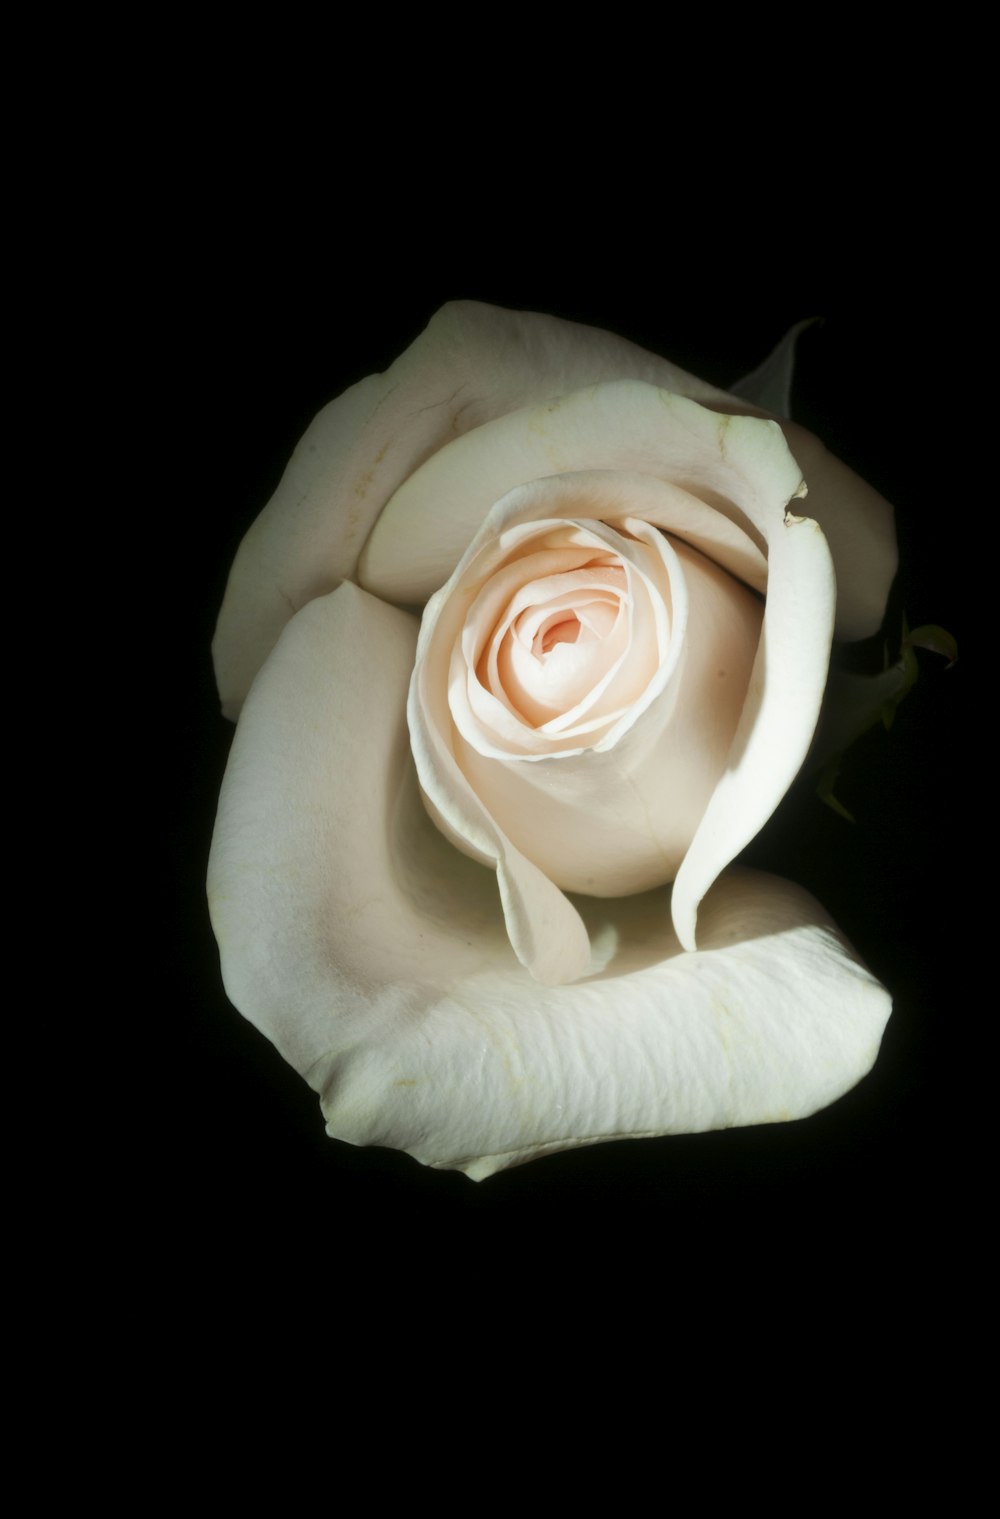 close-up photo of white rose